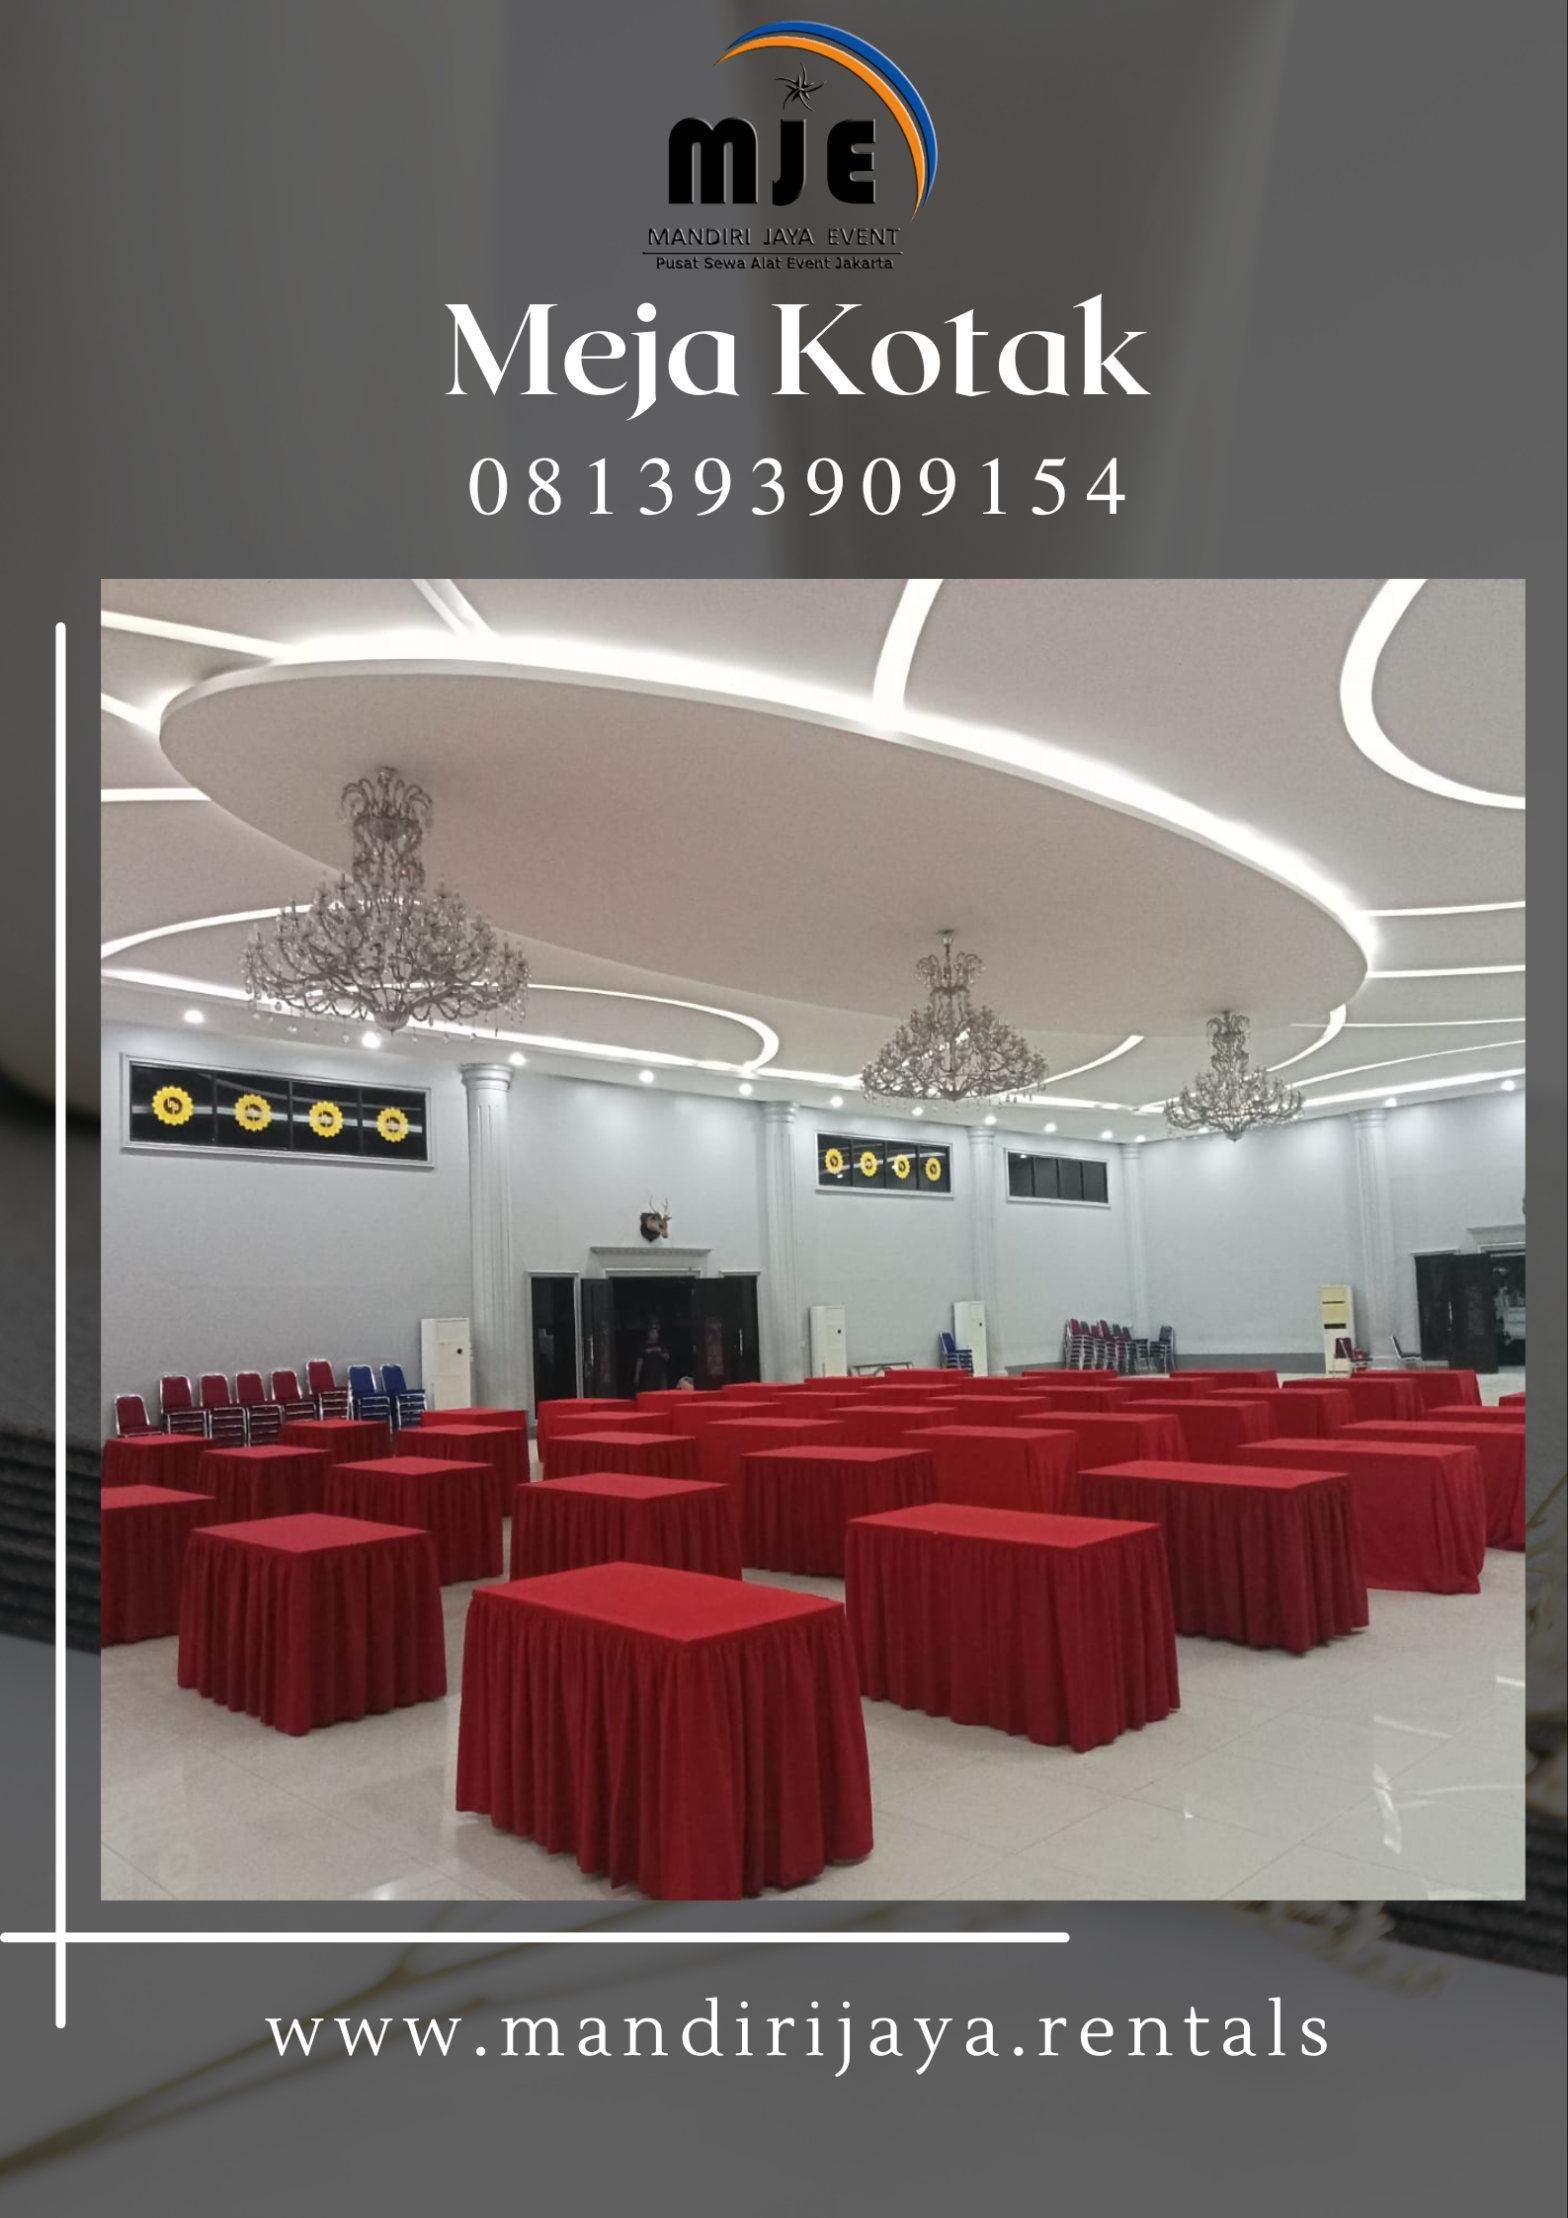 Pusat Sewa Meja Kotak Kebayoran Baru Jakarta Selatan